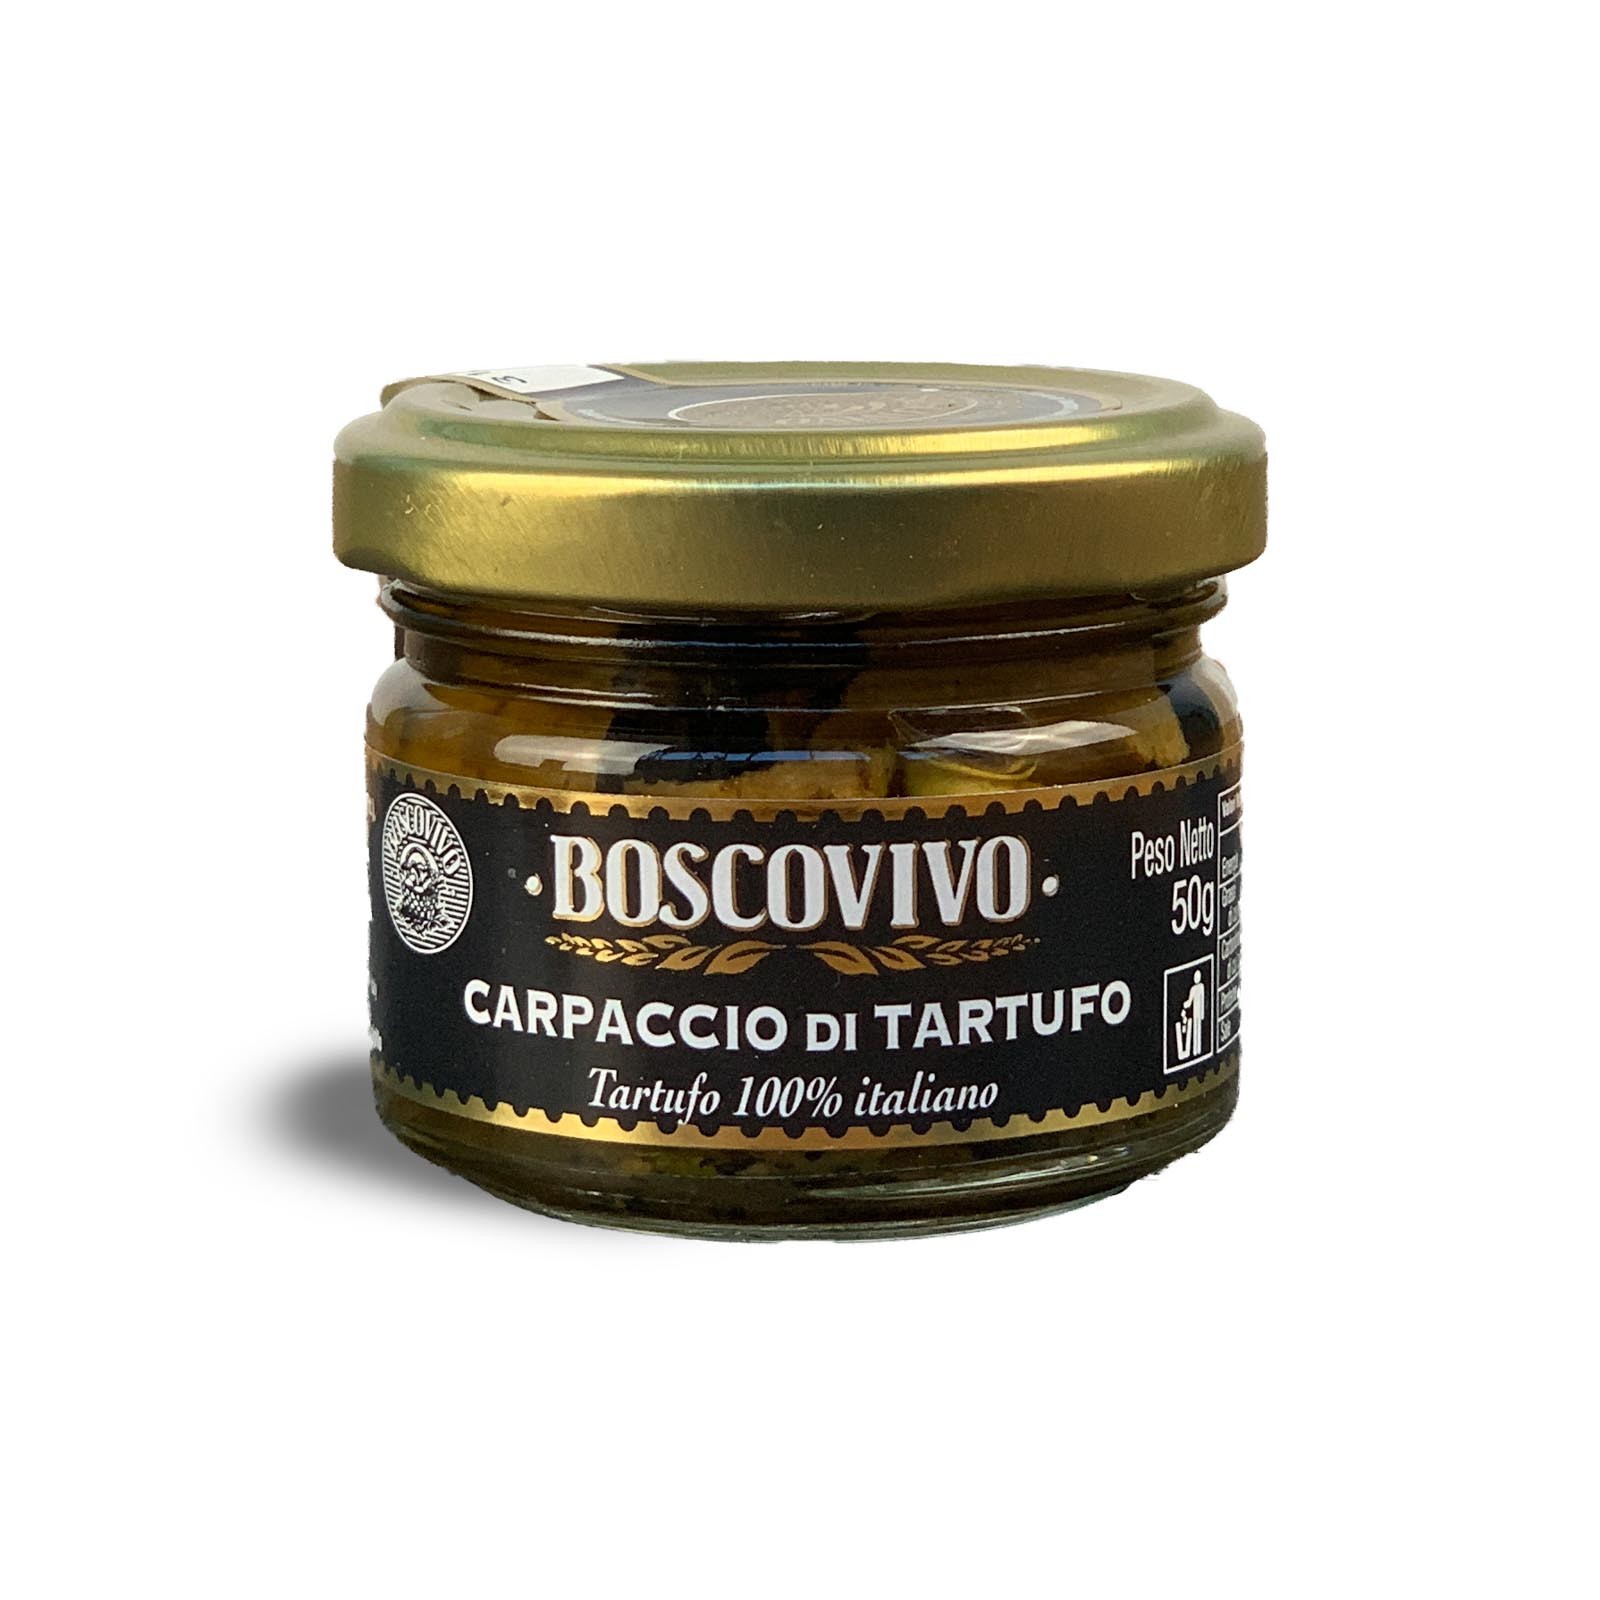 Black Summer Truffle Carpaccio - Tuber Aestivum Vitt. - 100% Italian.